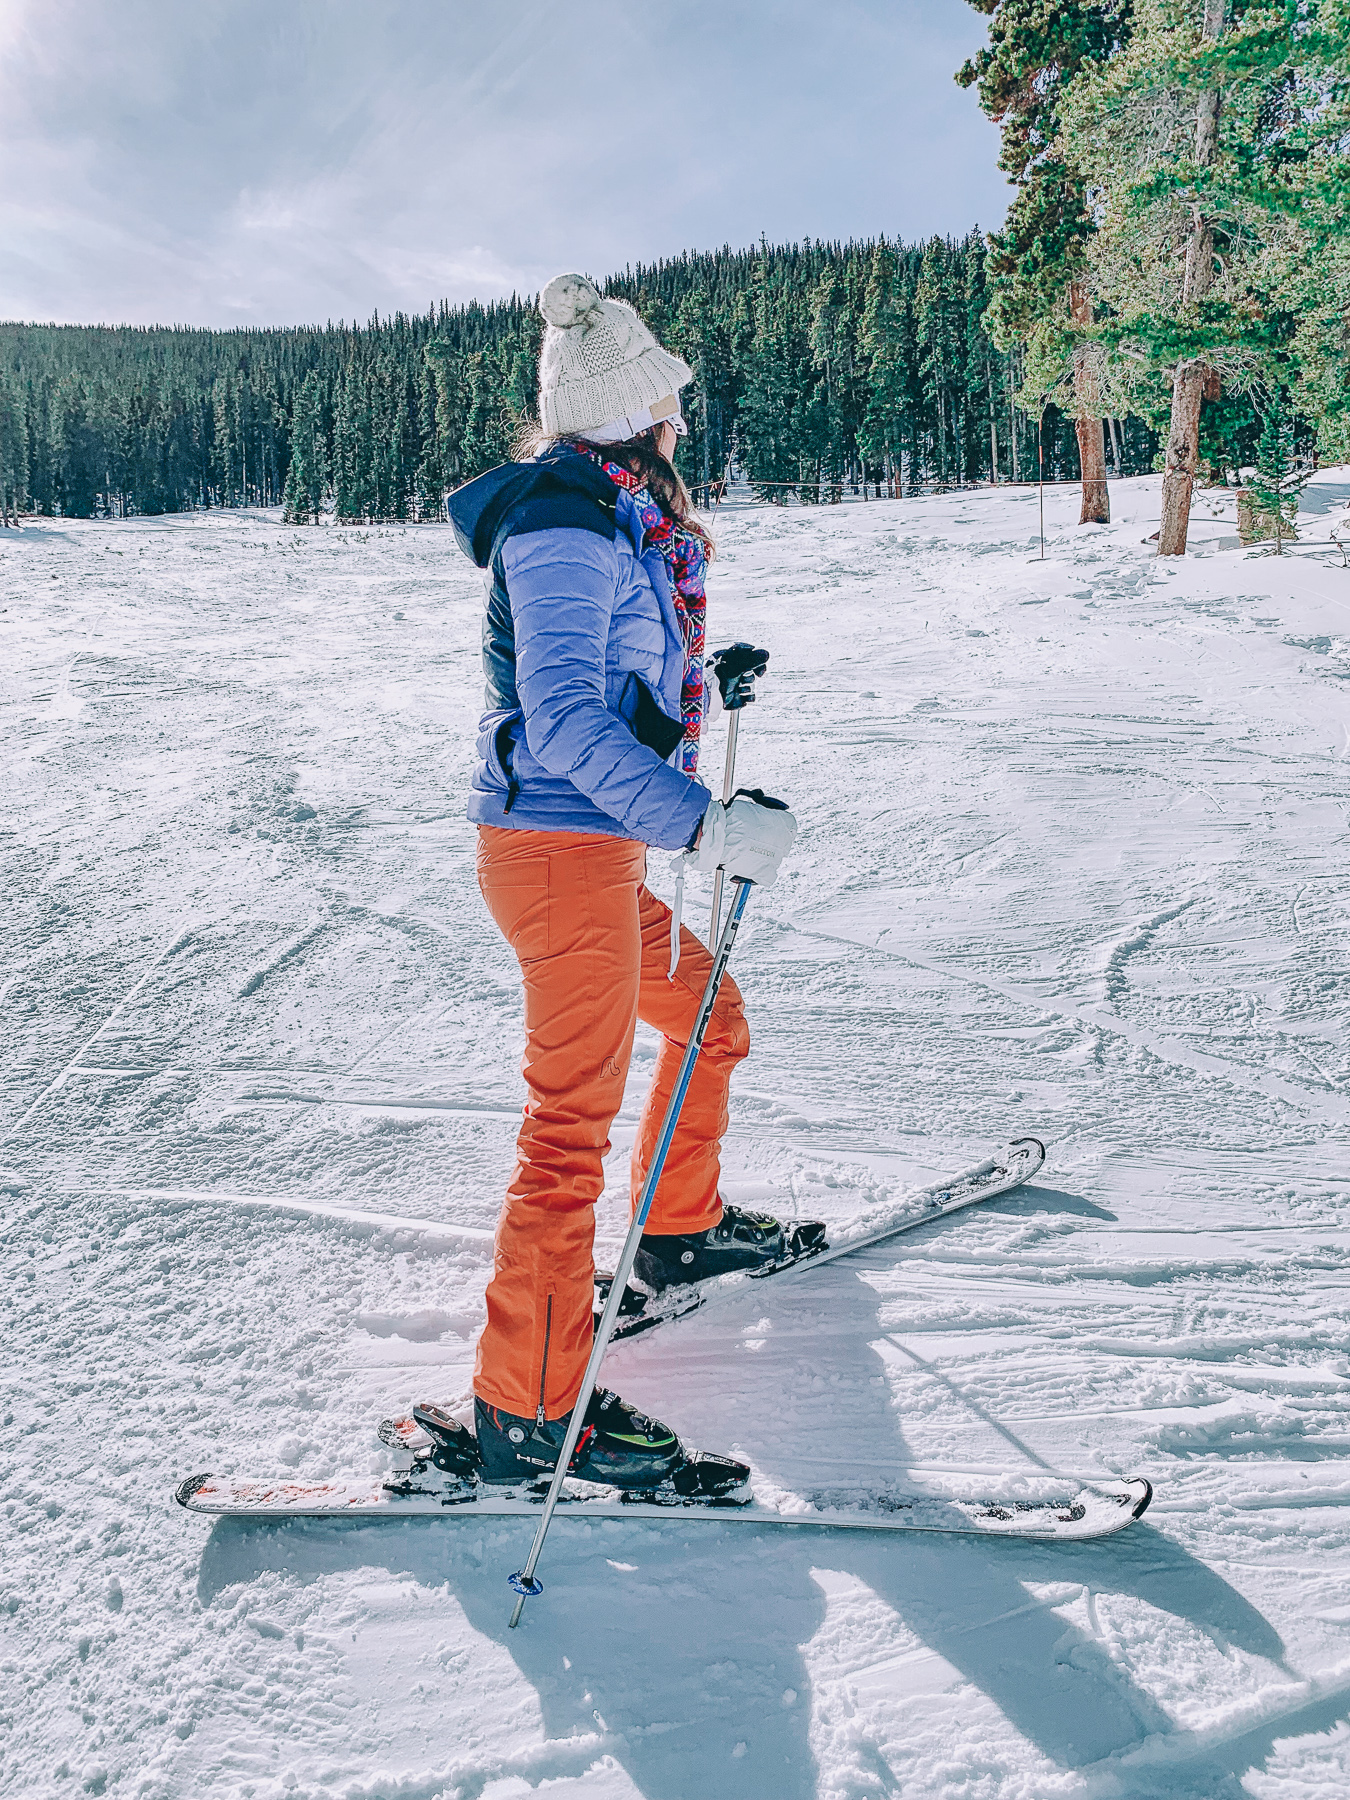 Ski - Sport and Lifestyle